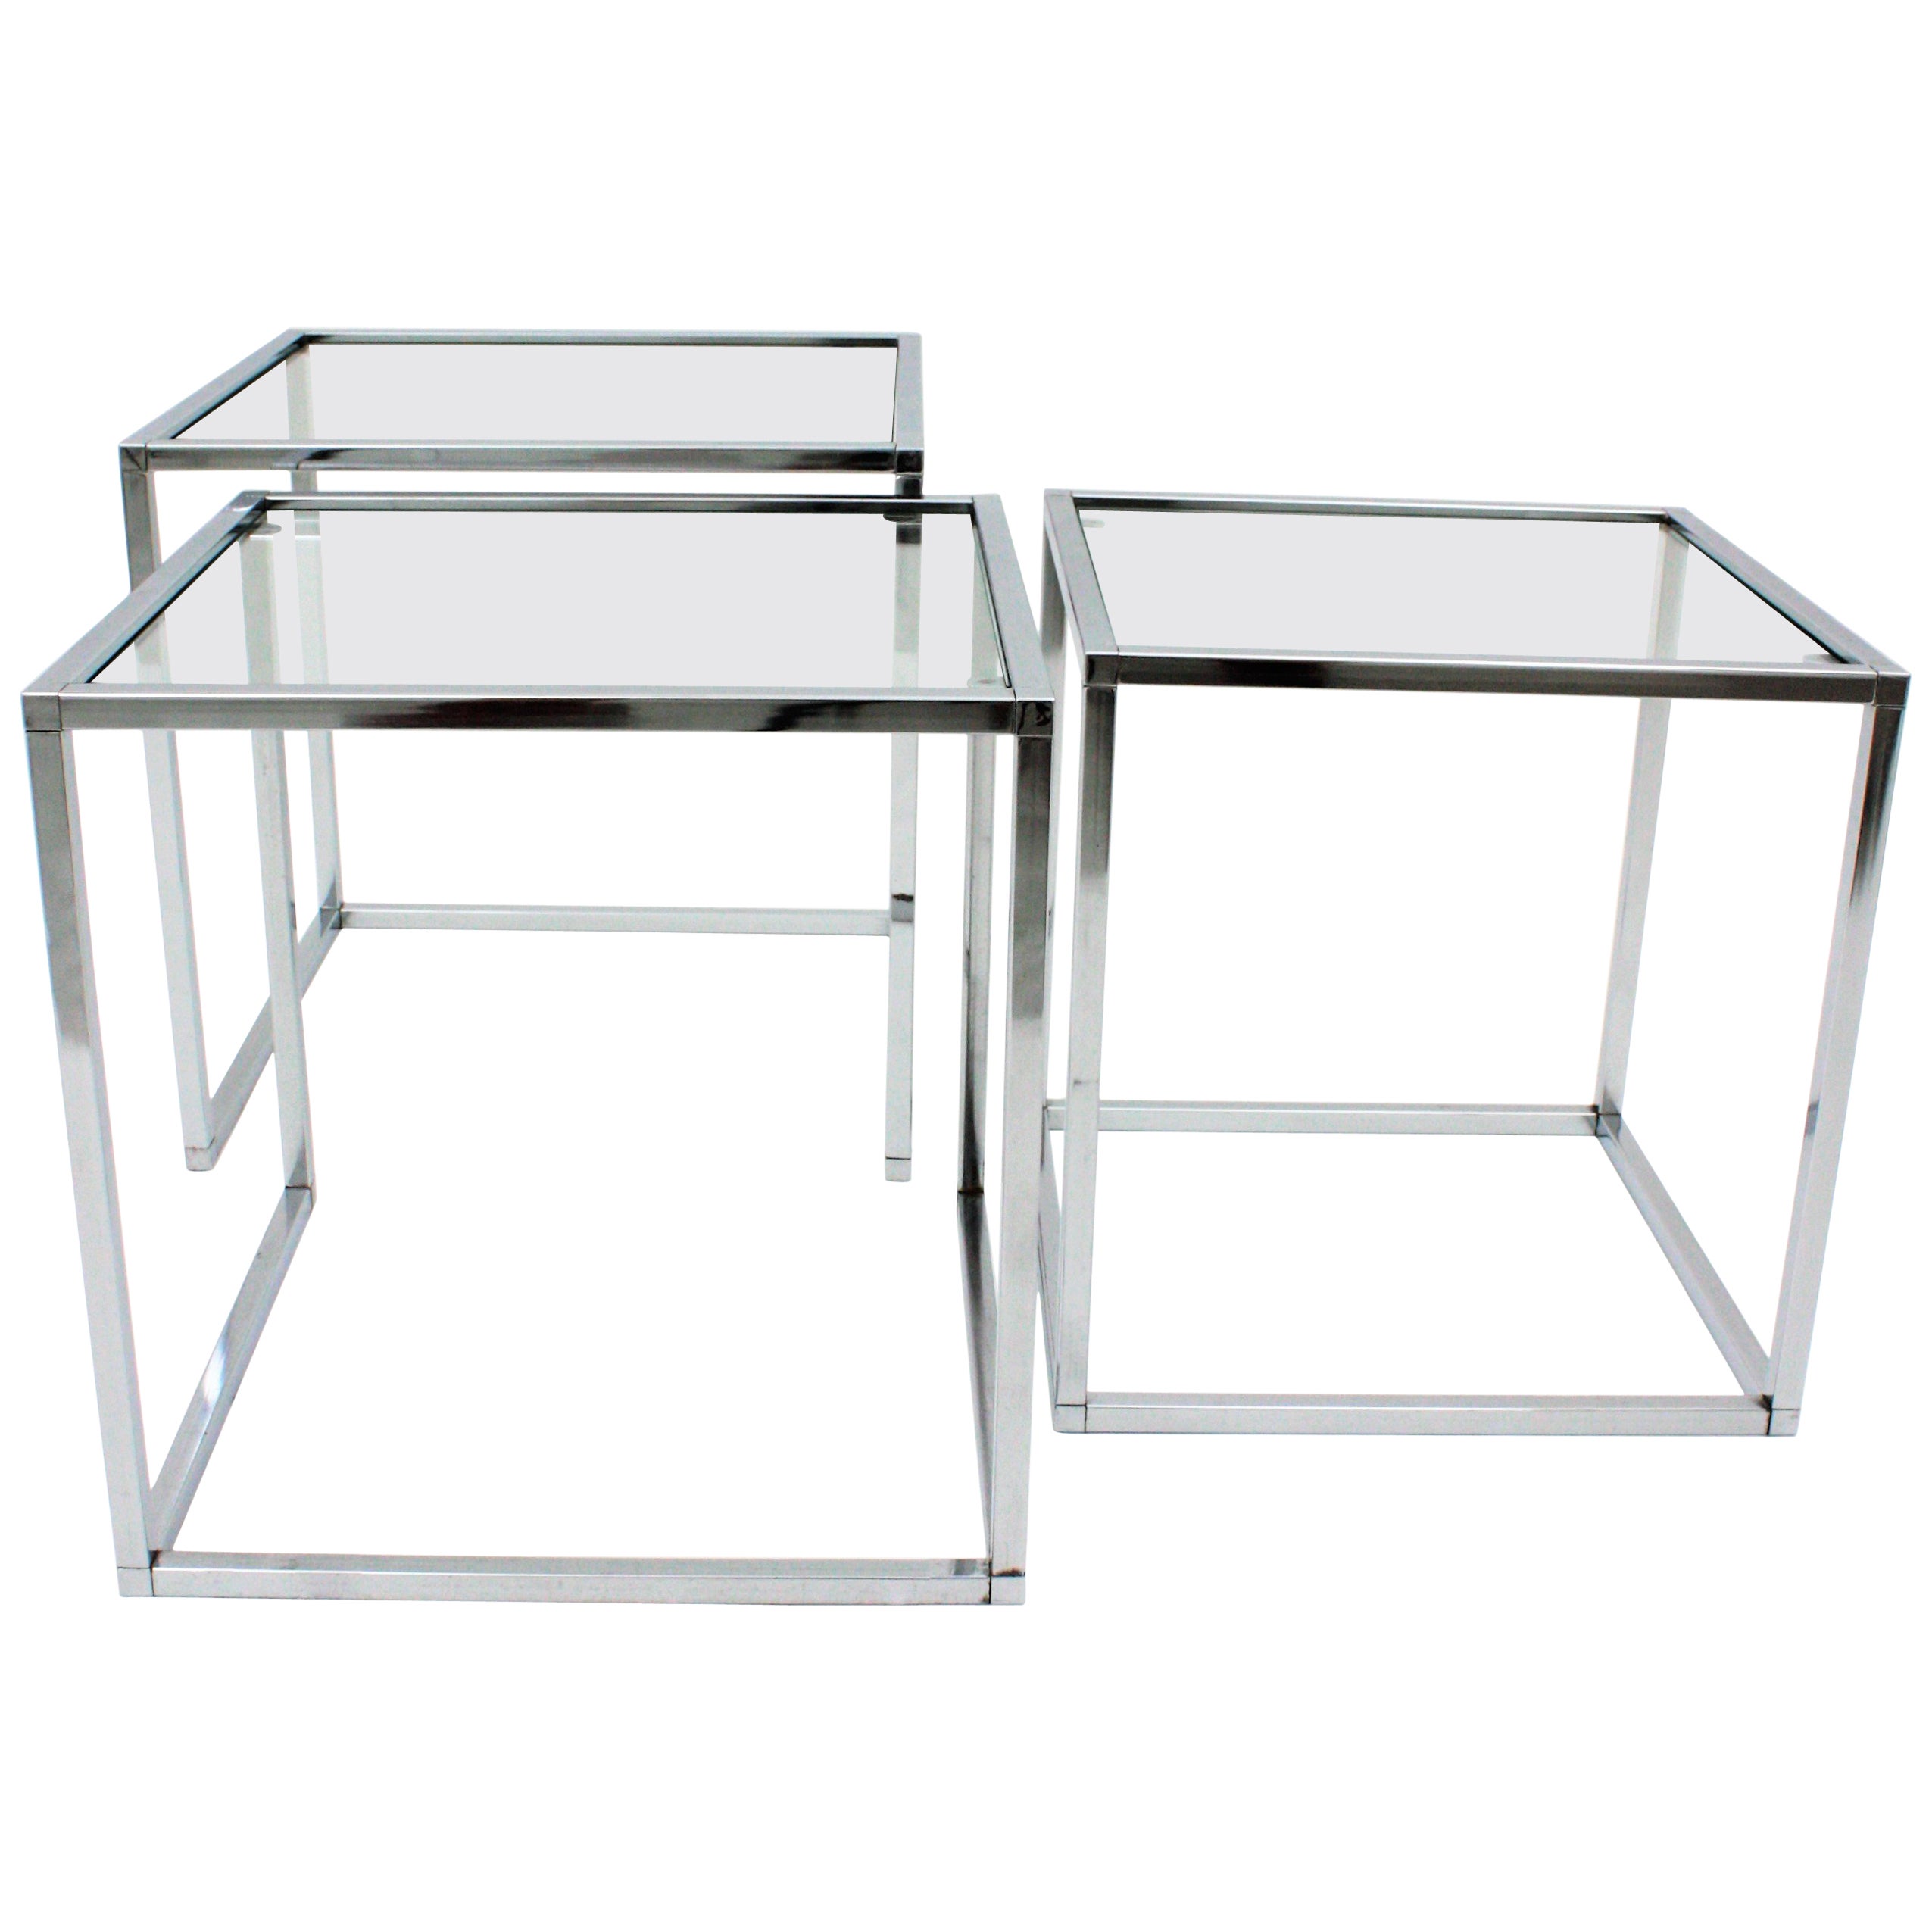 Italian Nesting Tables in Chromed Steel and Glass